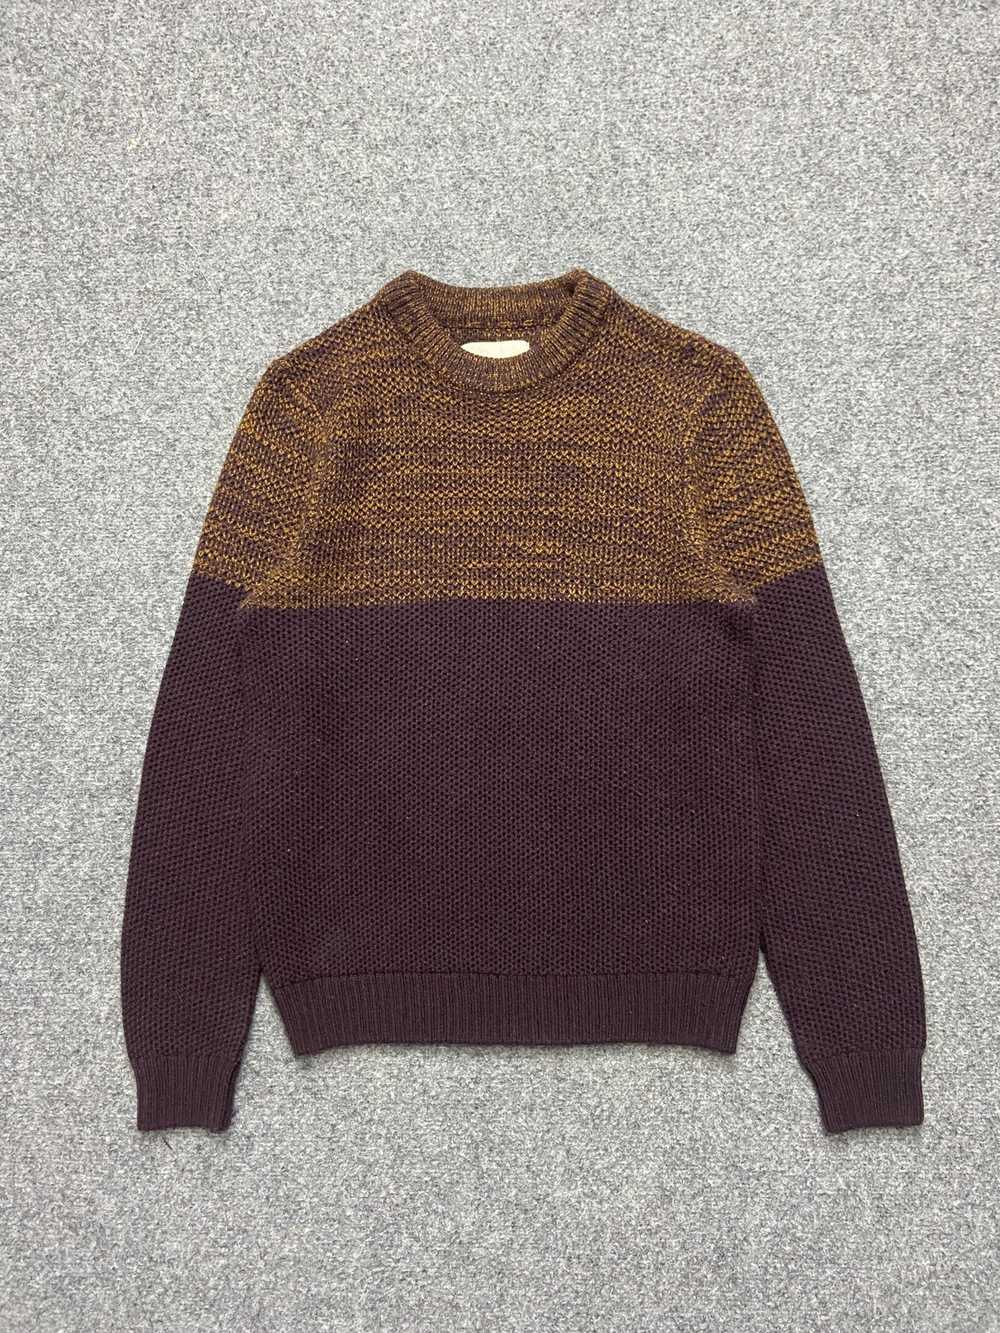 Folk Folk Knit Sweater - image 1